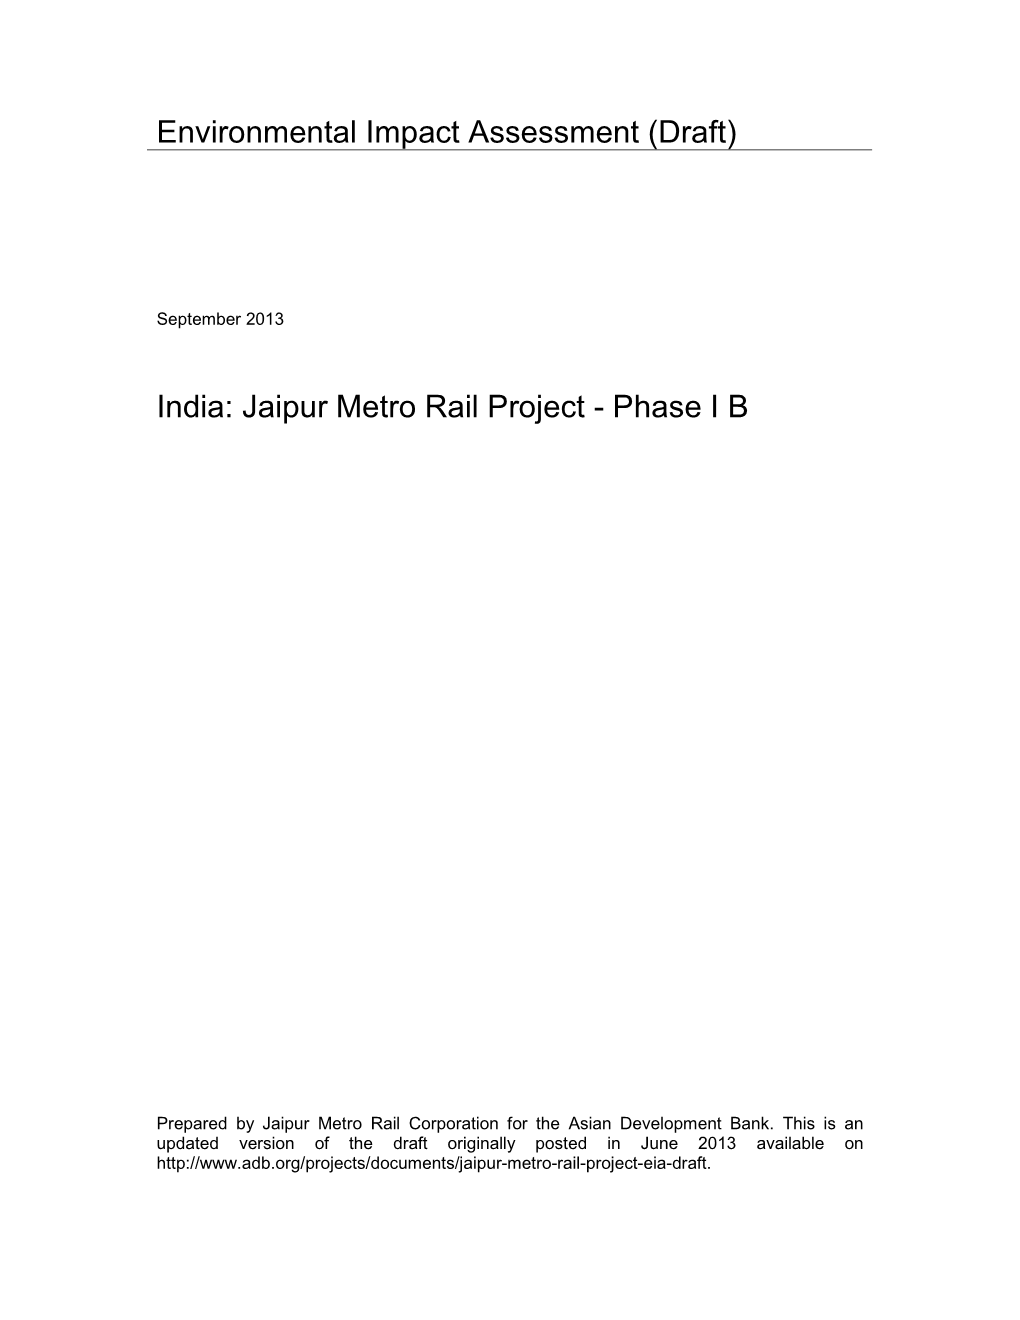 Jaipur Metro Rail Project - Phase I B